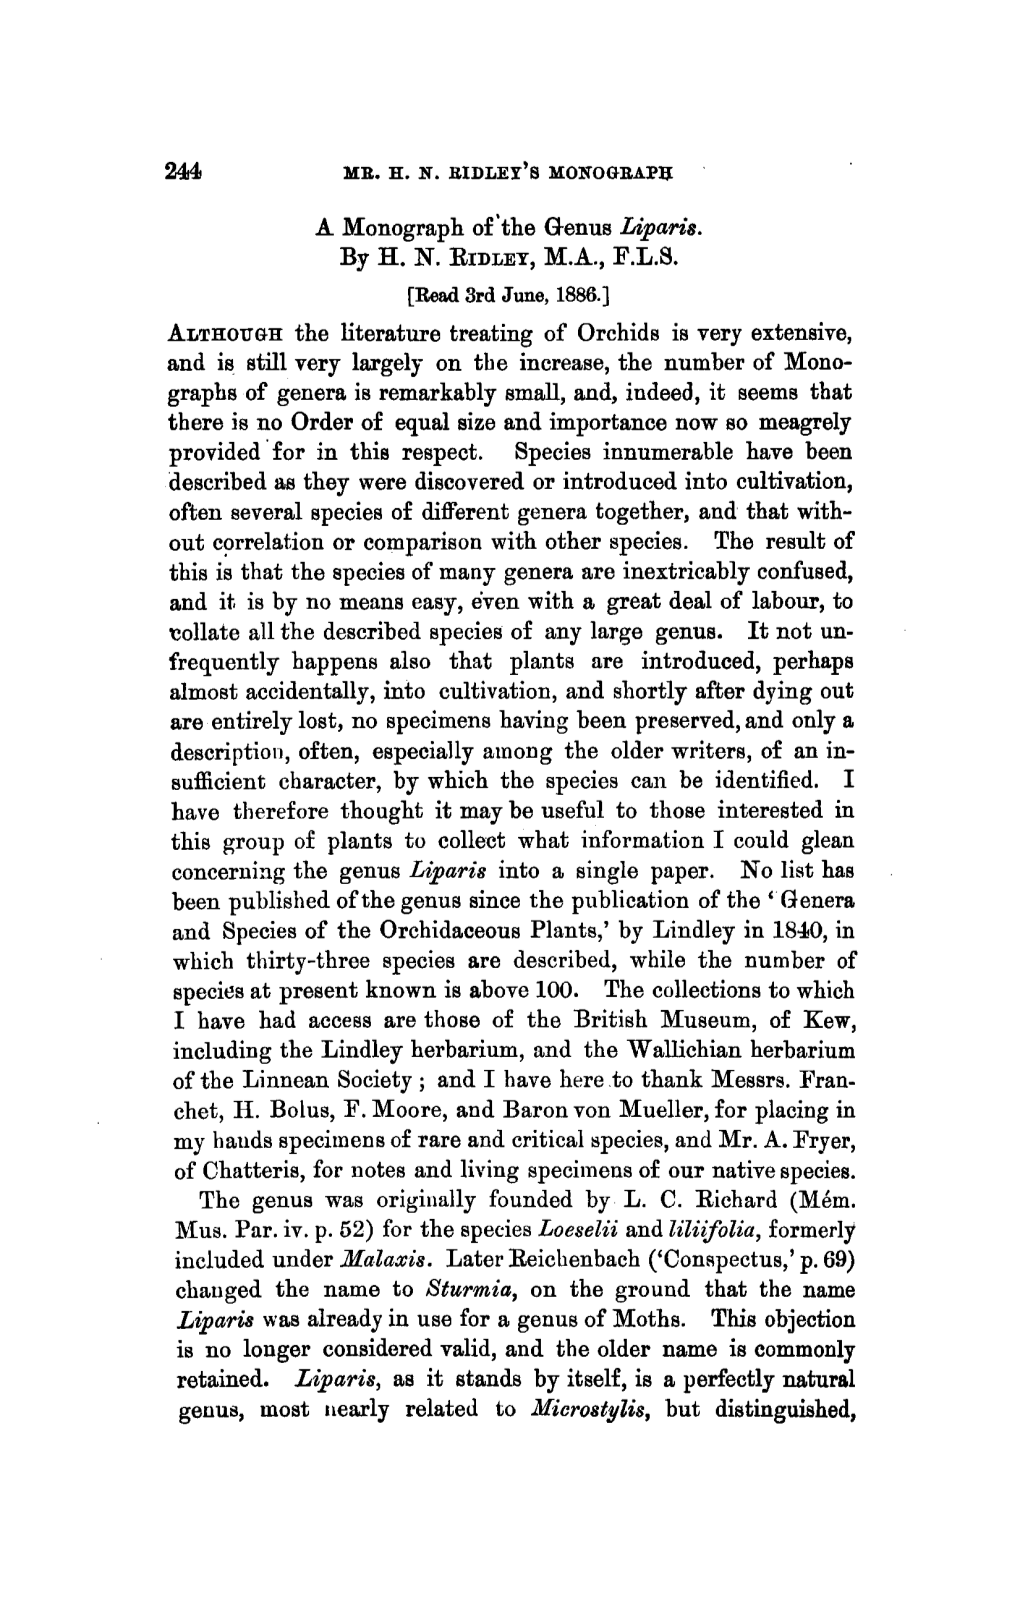 A Monograph of the Genus Liparis